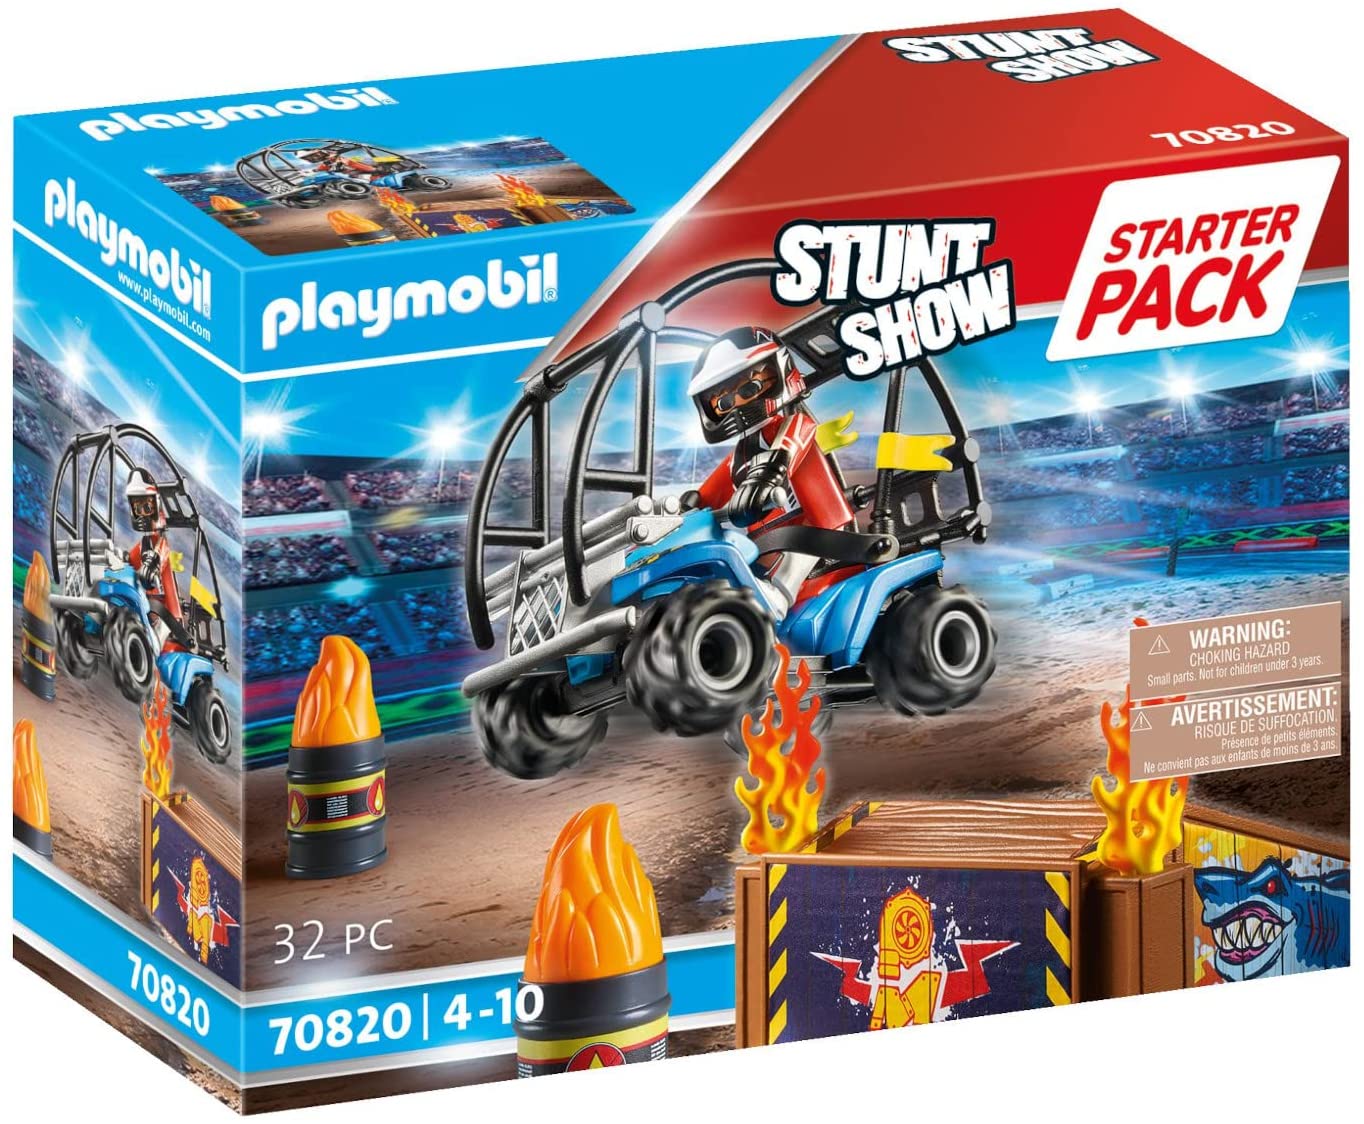 Playmobil Starter 70820 Pack Stuntshow Quad with Fire Ramp